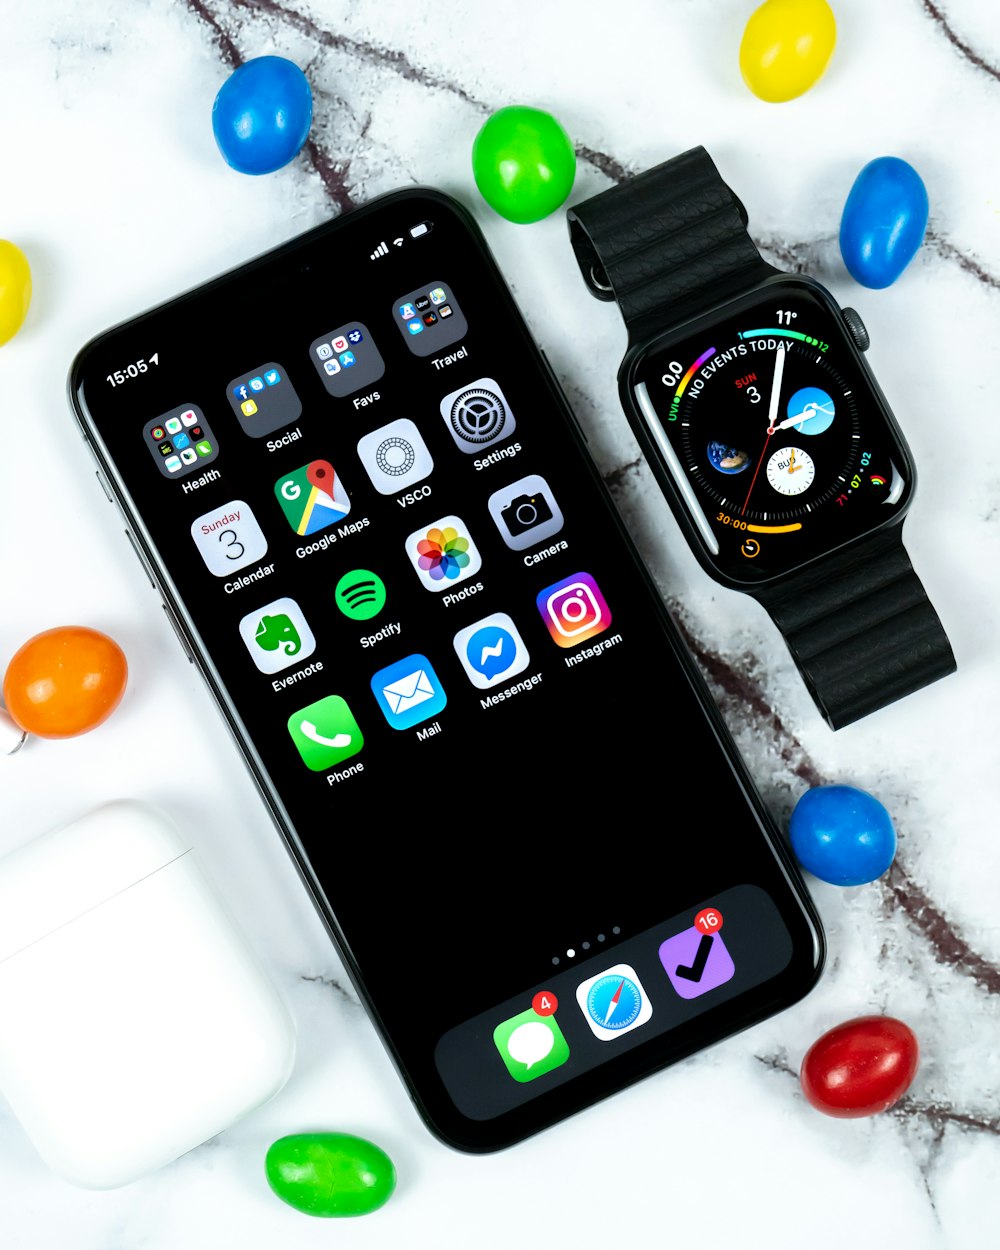 Apple Watch ao lado do iPhone